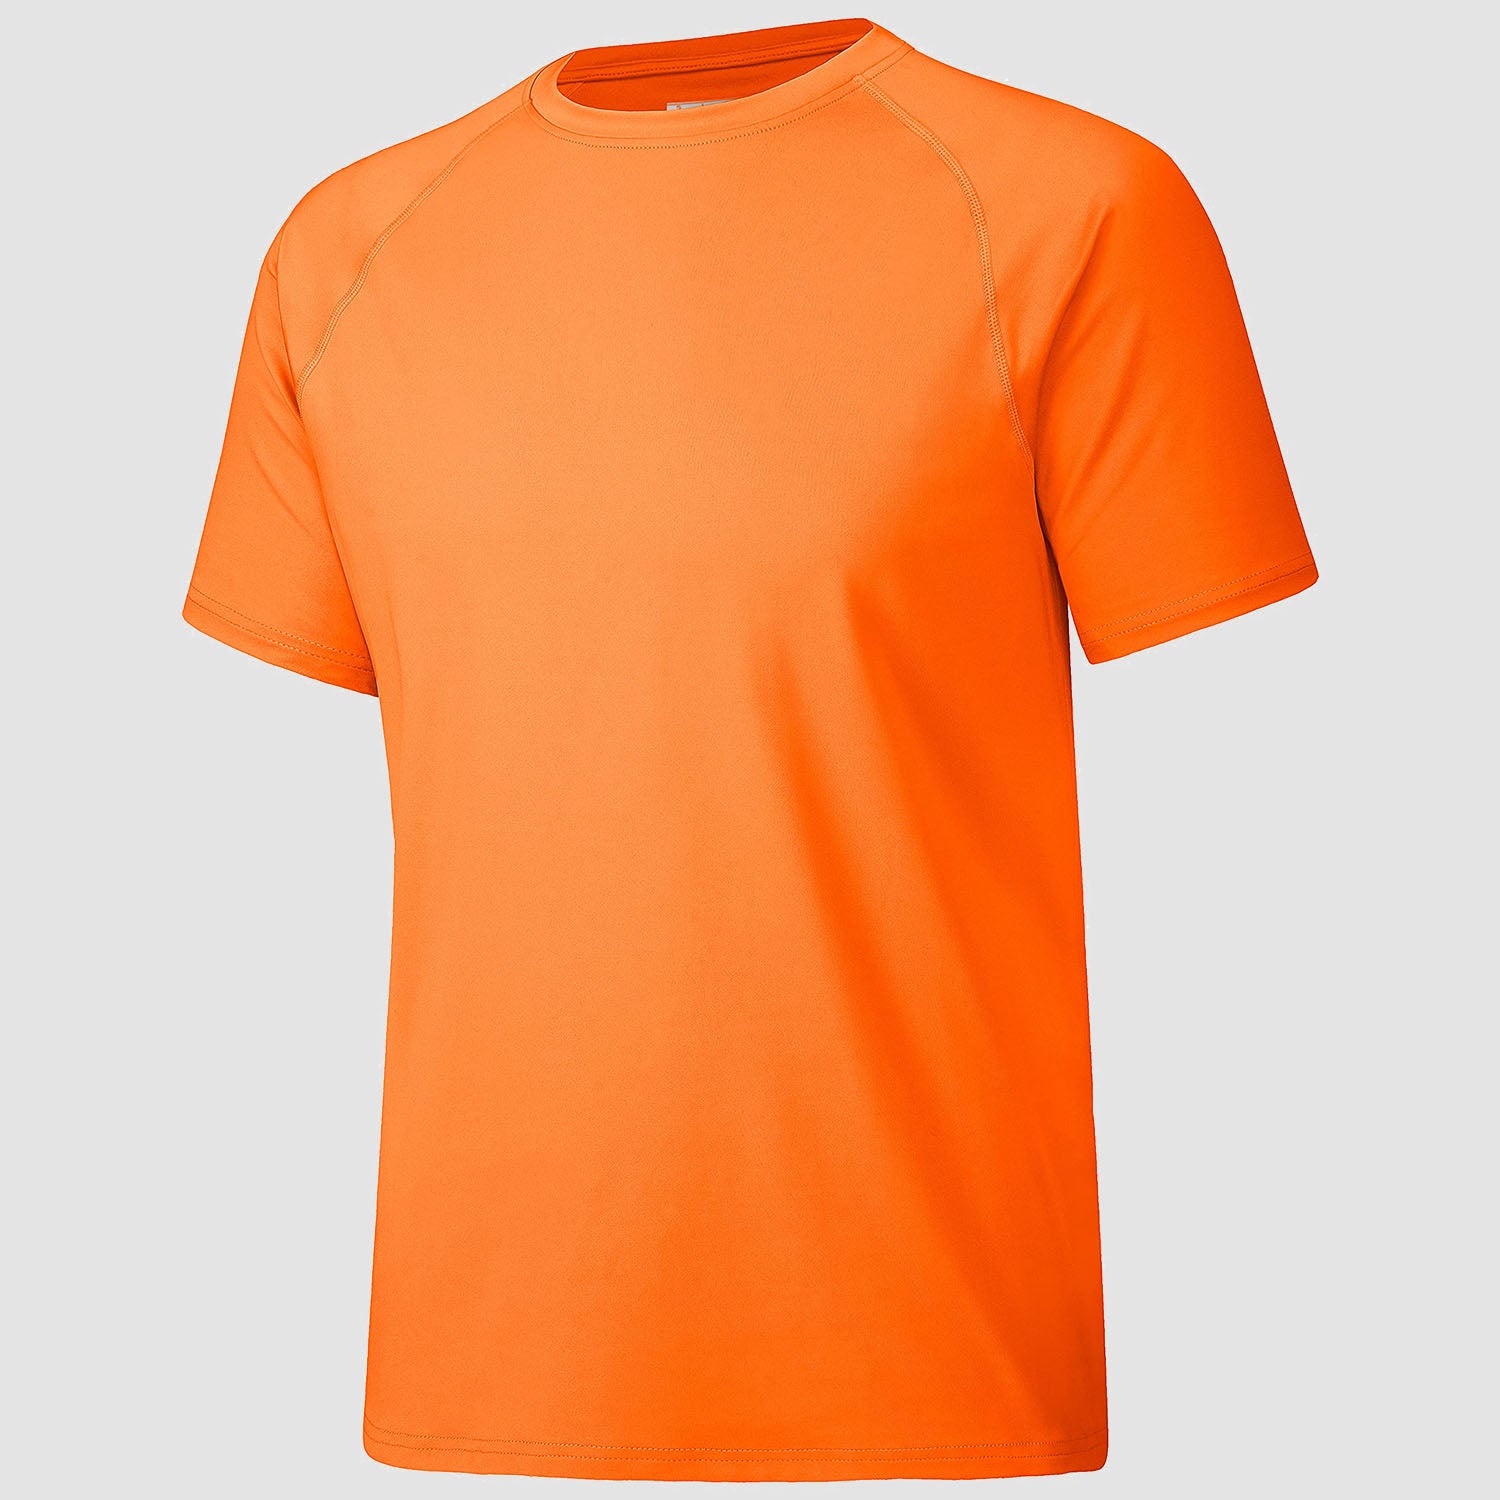 【Buy 4 Get 4th Free】Men's T-shirt Quick Dry UPF 80+ AthleticT-Shirts